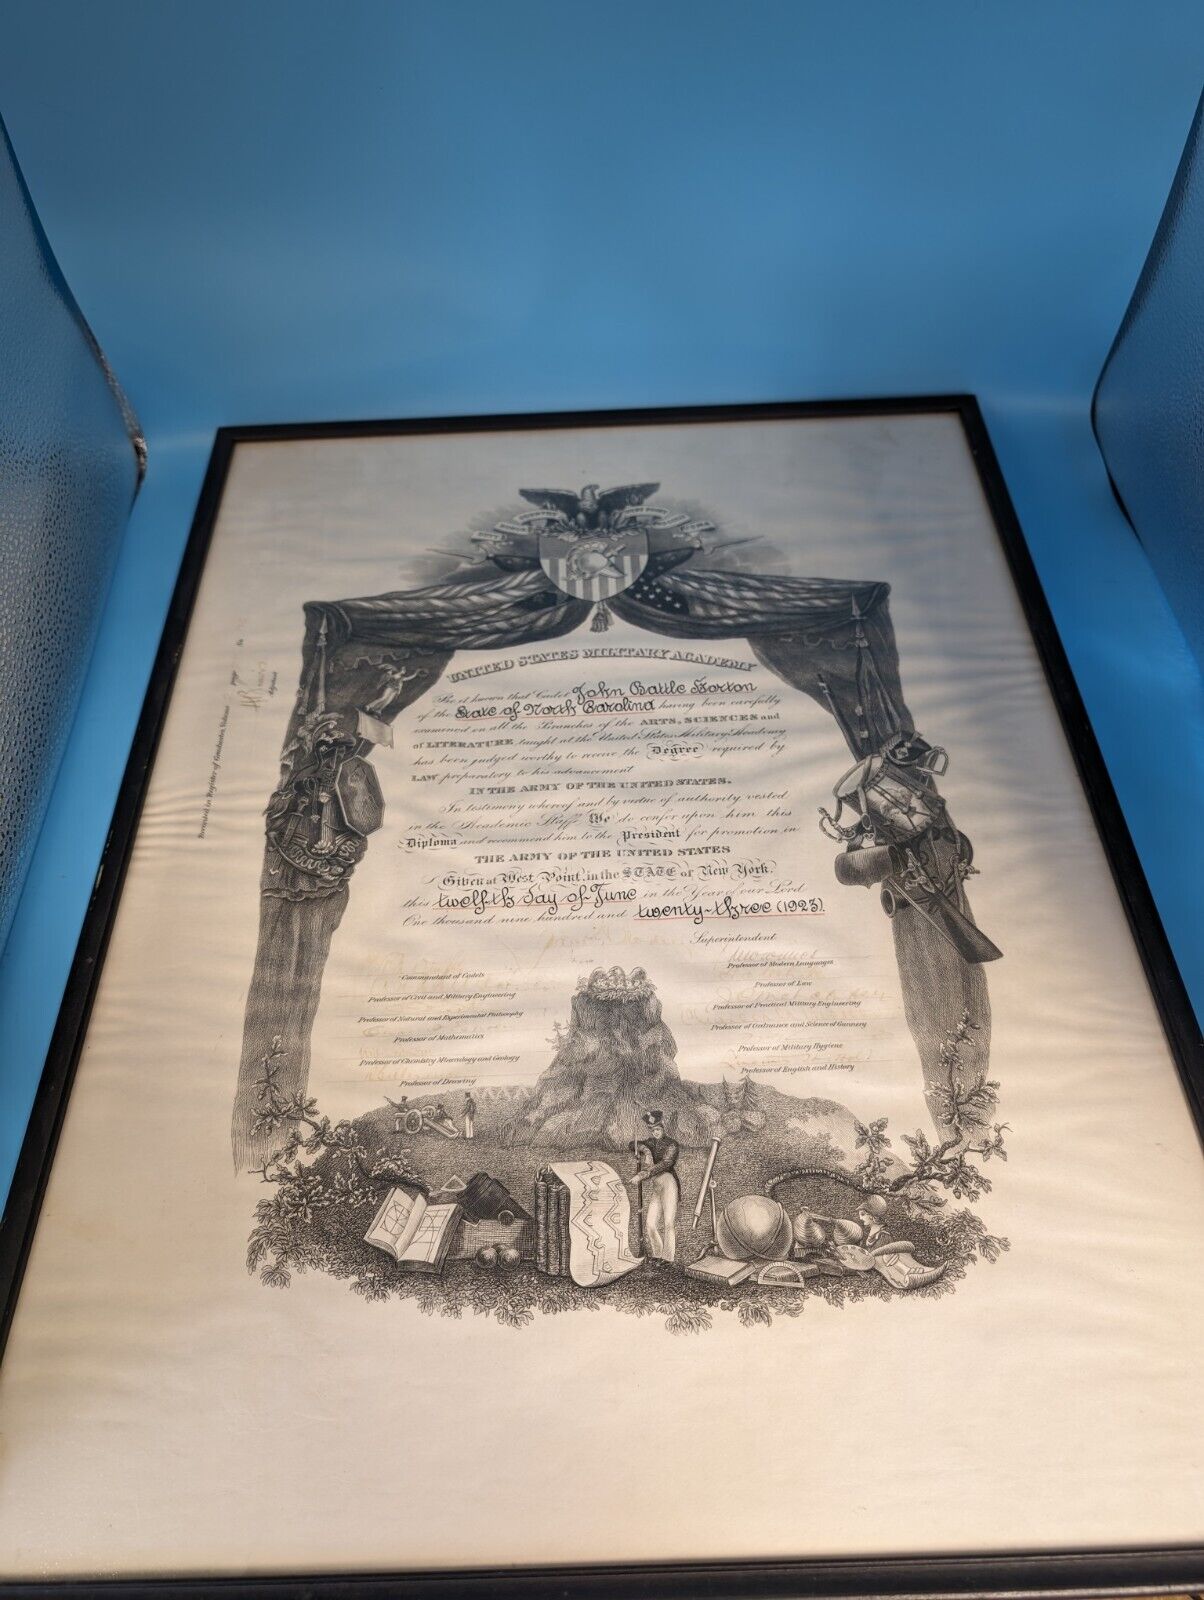 Framed Rare 1932 West Point Diploma Presented to John Battle Horton